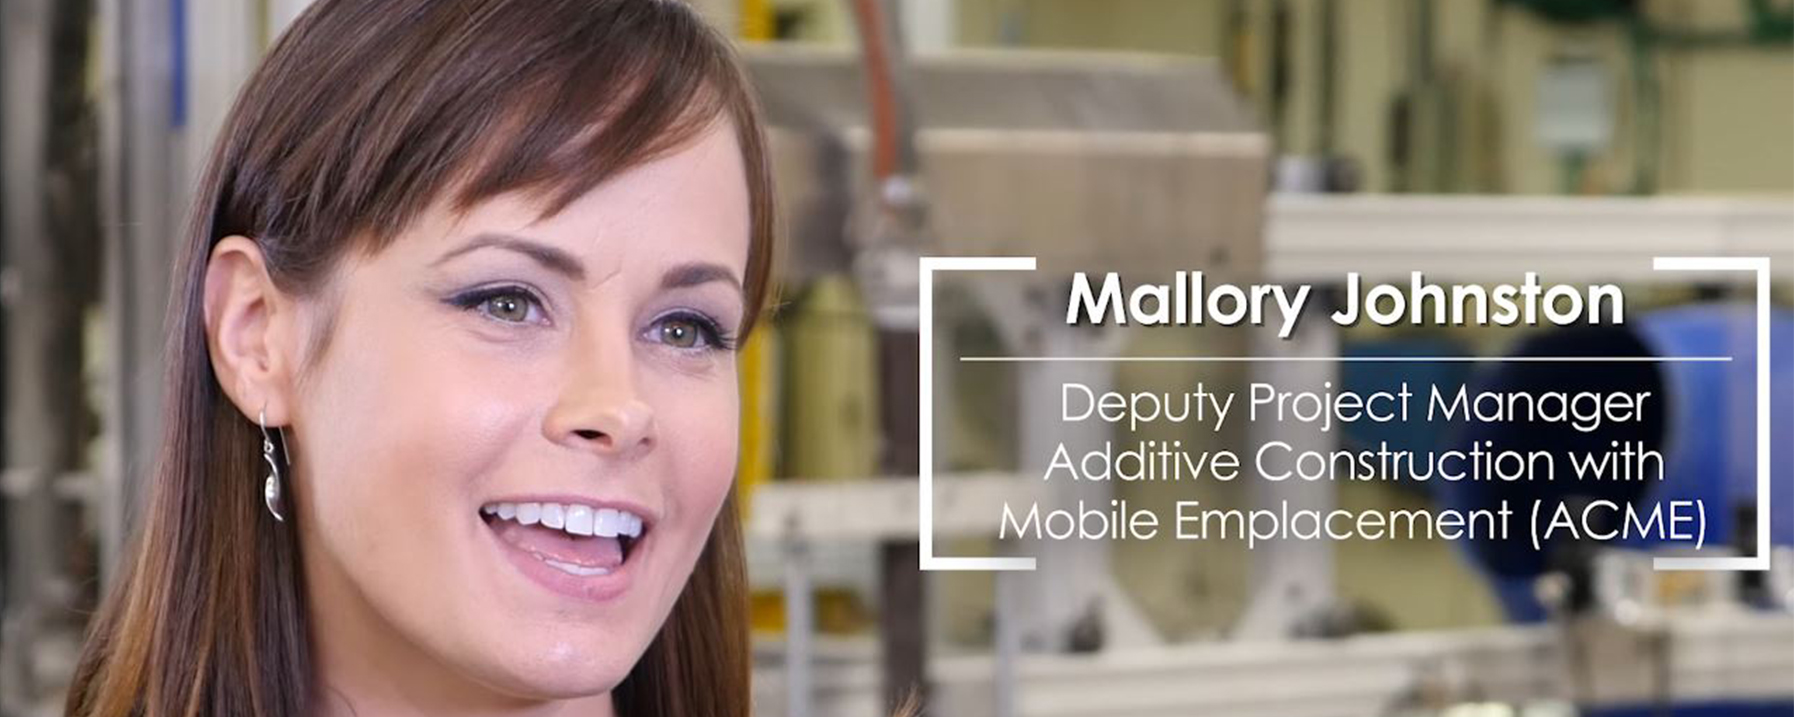 Faces of Technology: Meet Mallory Johnston